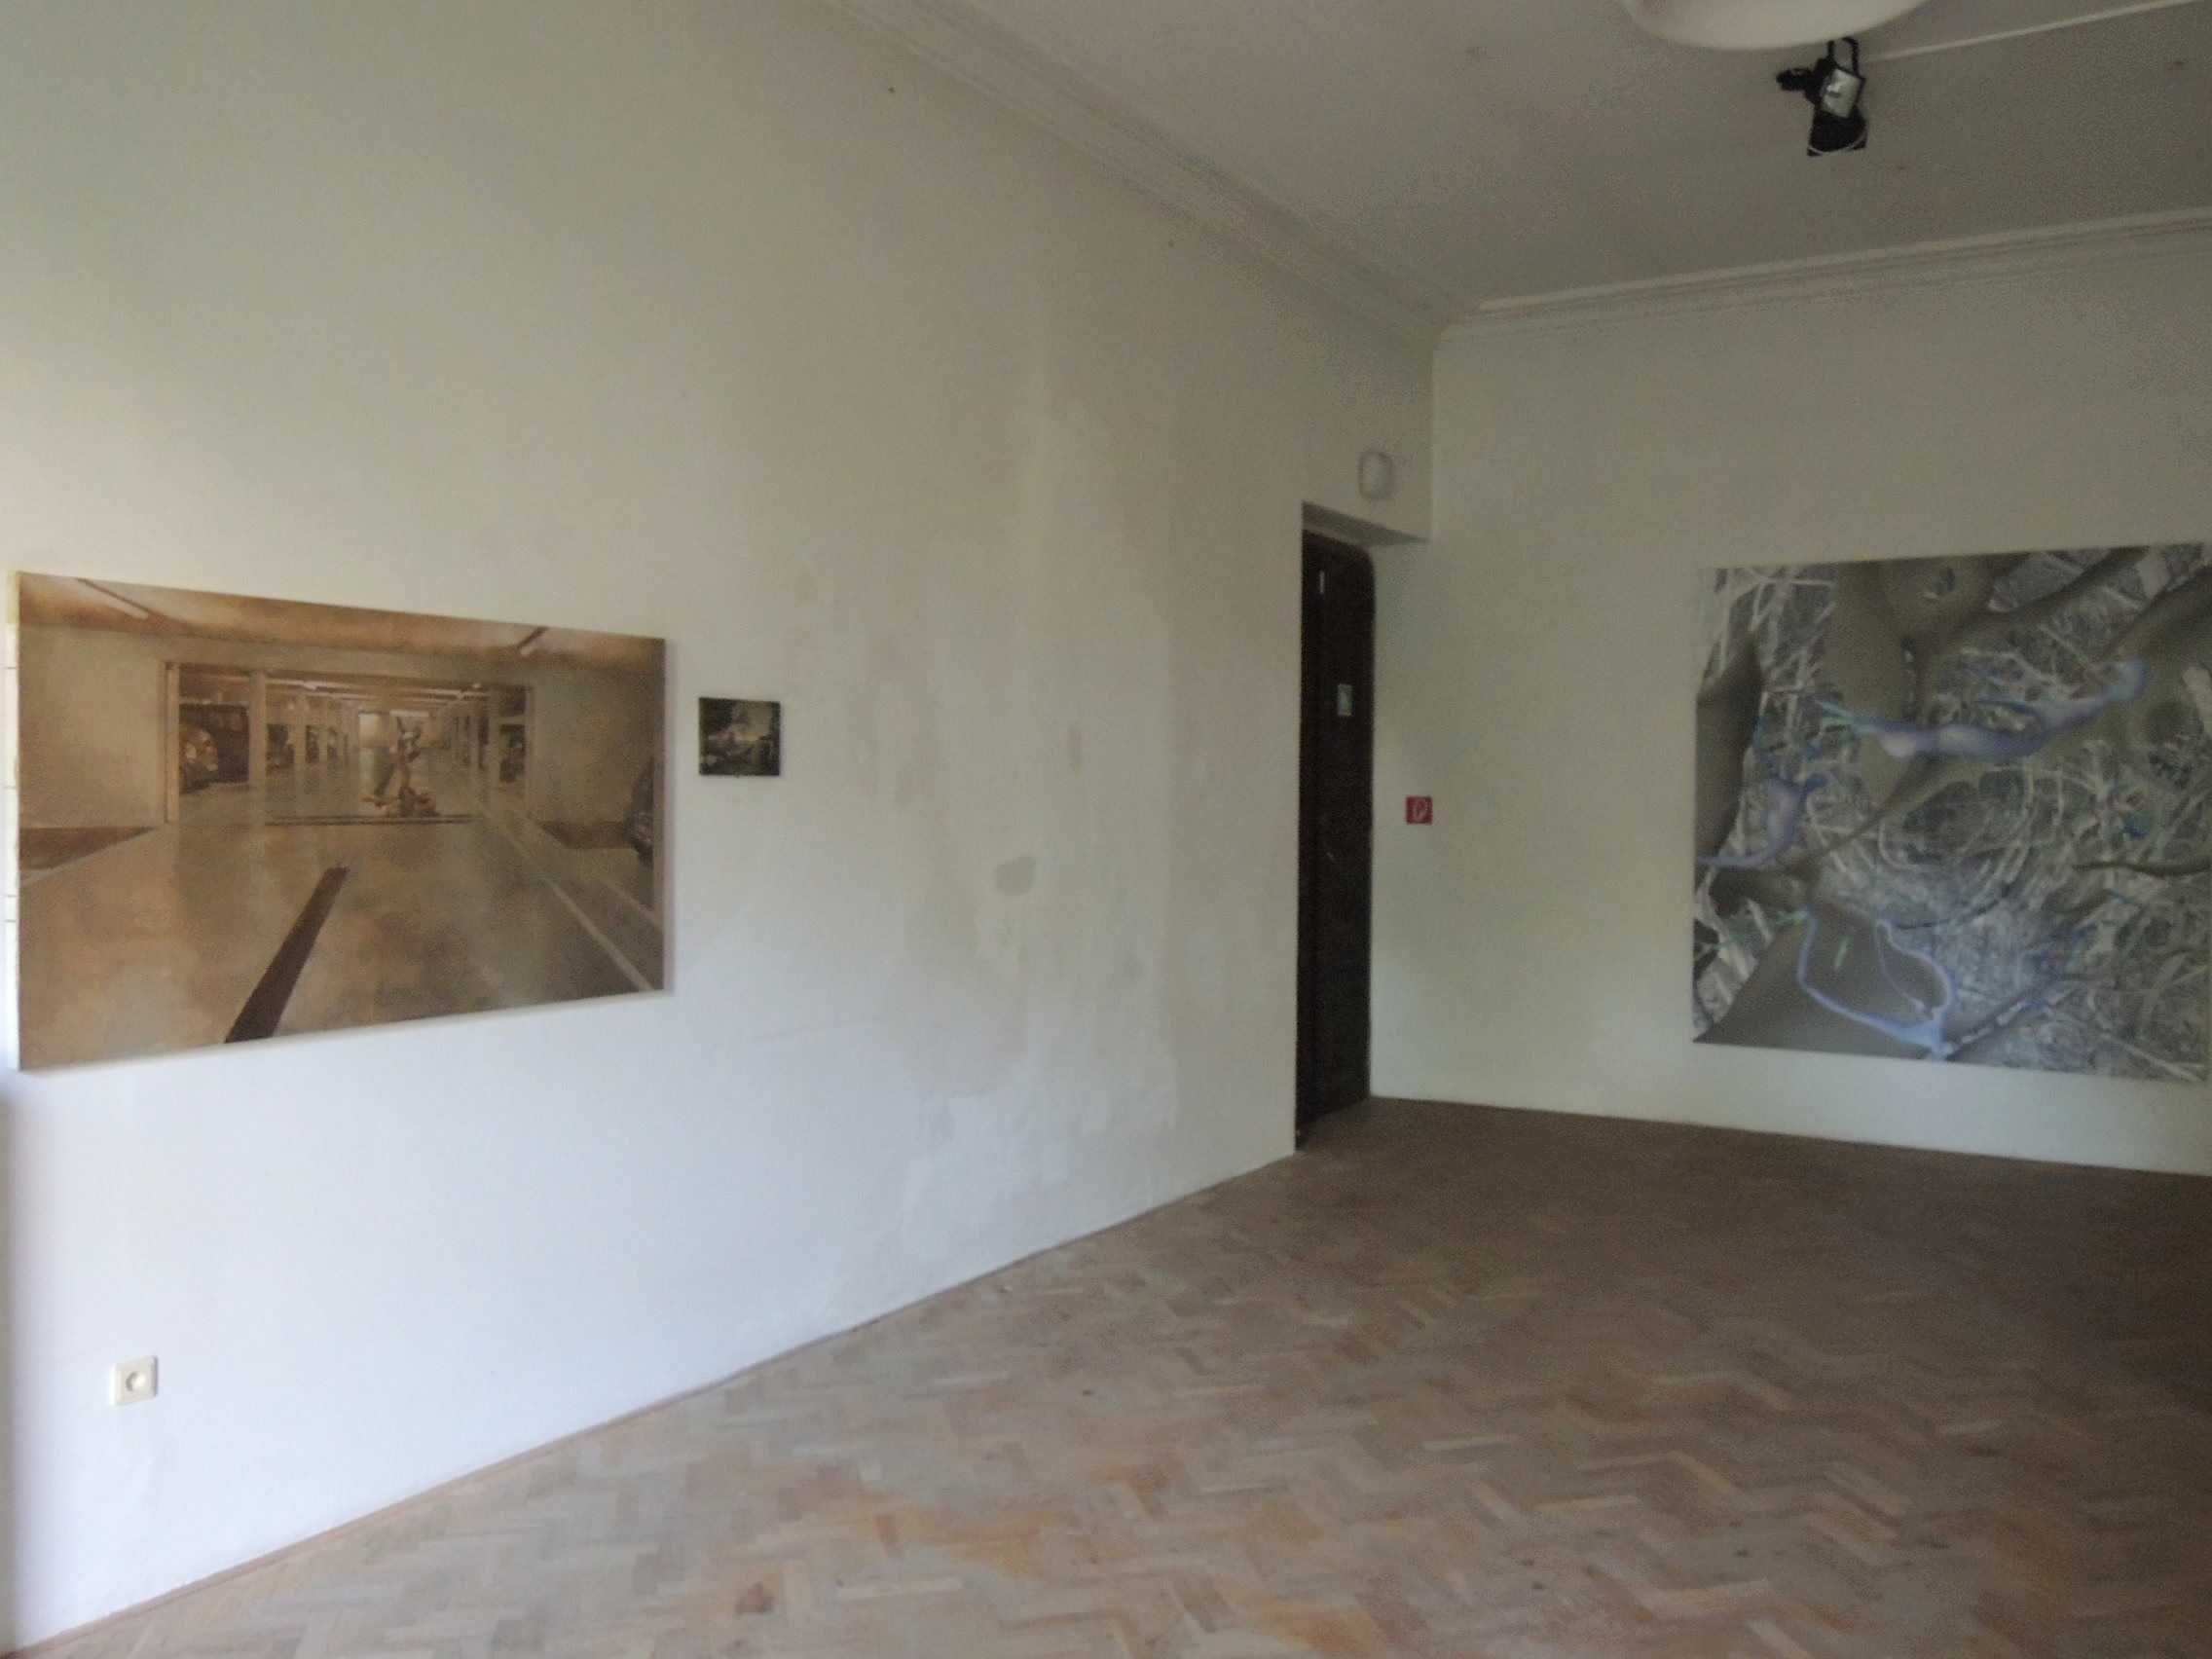   La Belle Peinture 2 , Bratislava (SK), Pisztory Palace.&nbsp;Curators : Eva Hober and Ivan Jançar. Guillaume Bresson,&nbsp; 